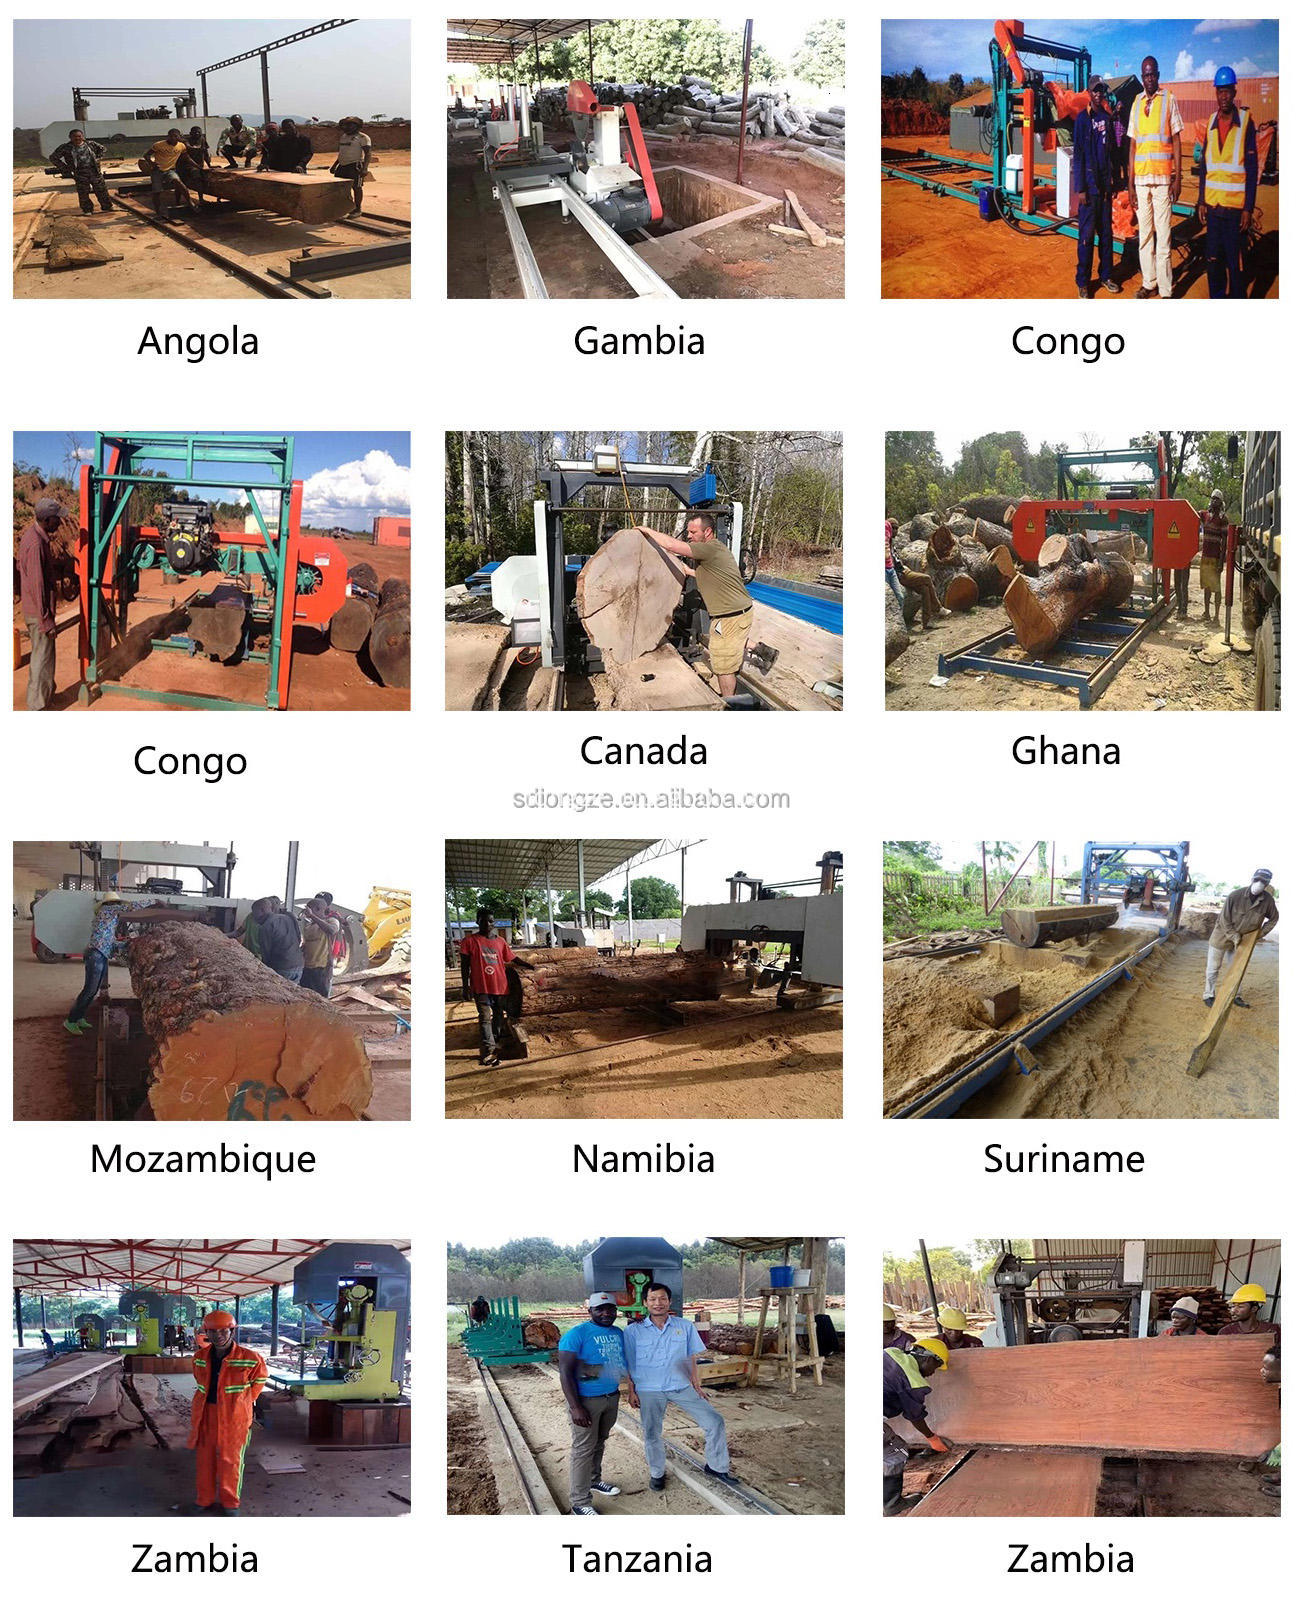 590 mm SW26 China Factory Supply Sawmill con banda de madera de madera móvil Banda de sierra Tipo horizontal